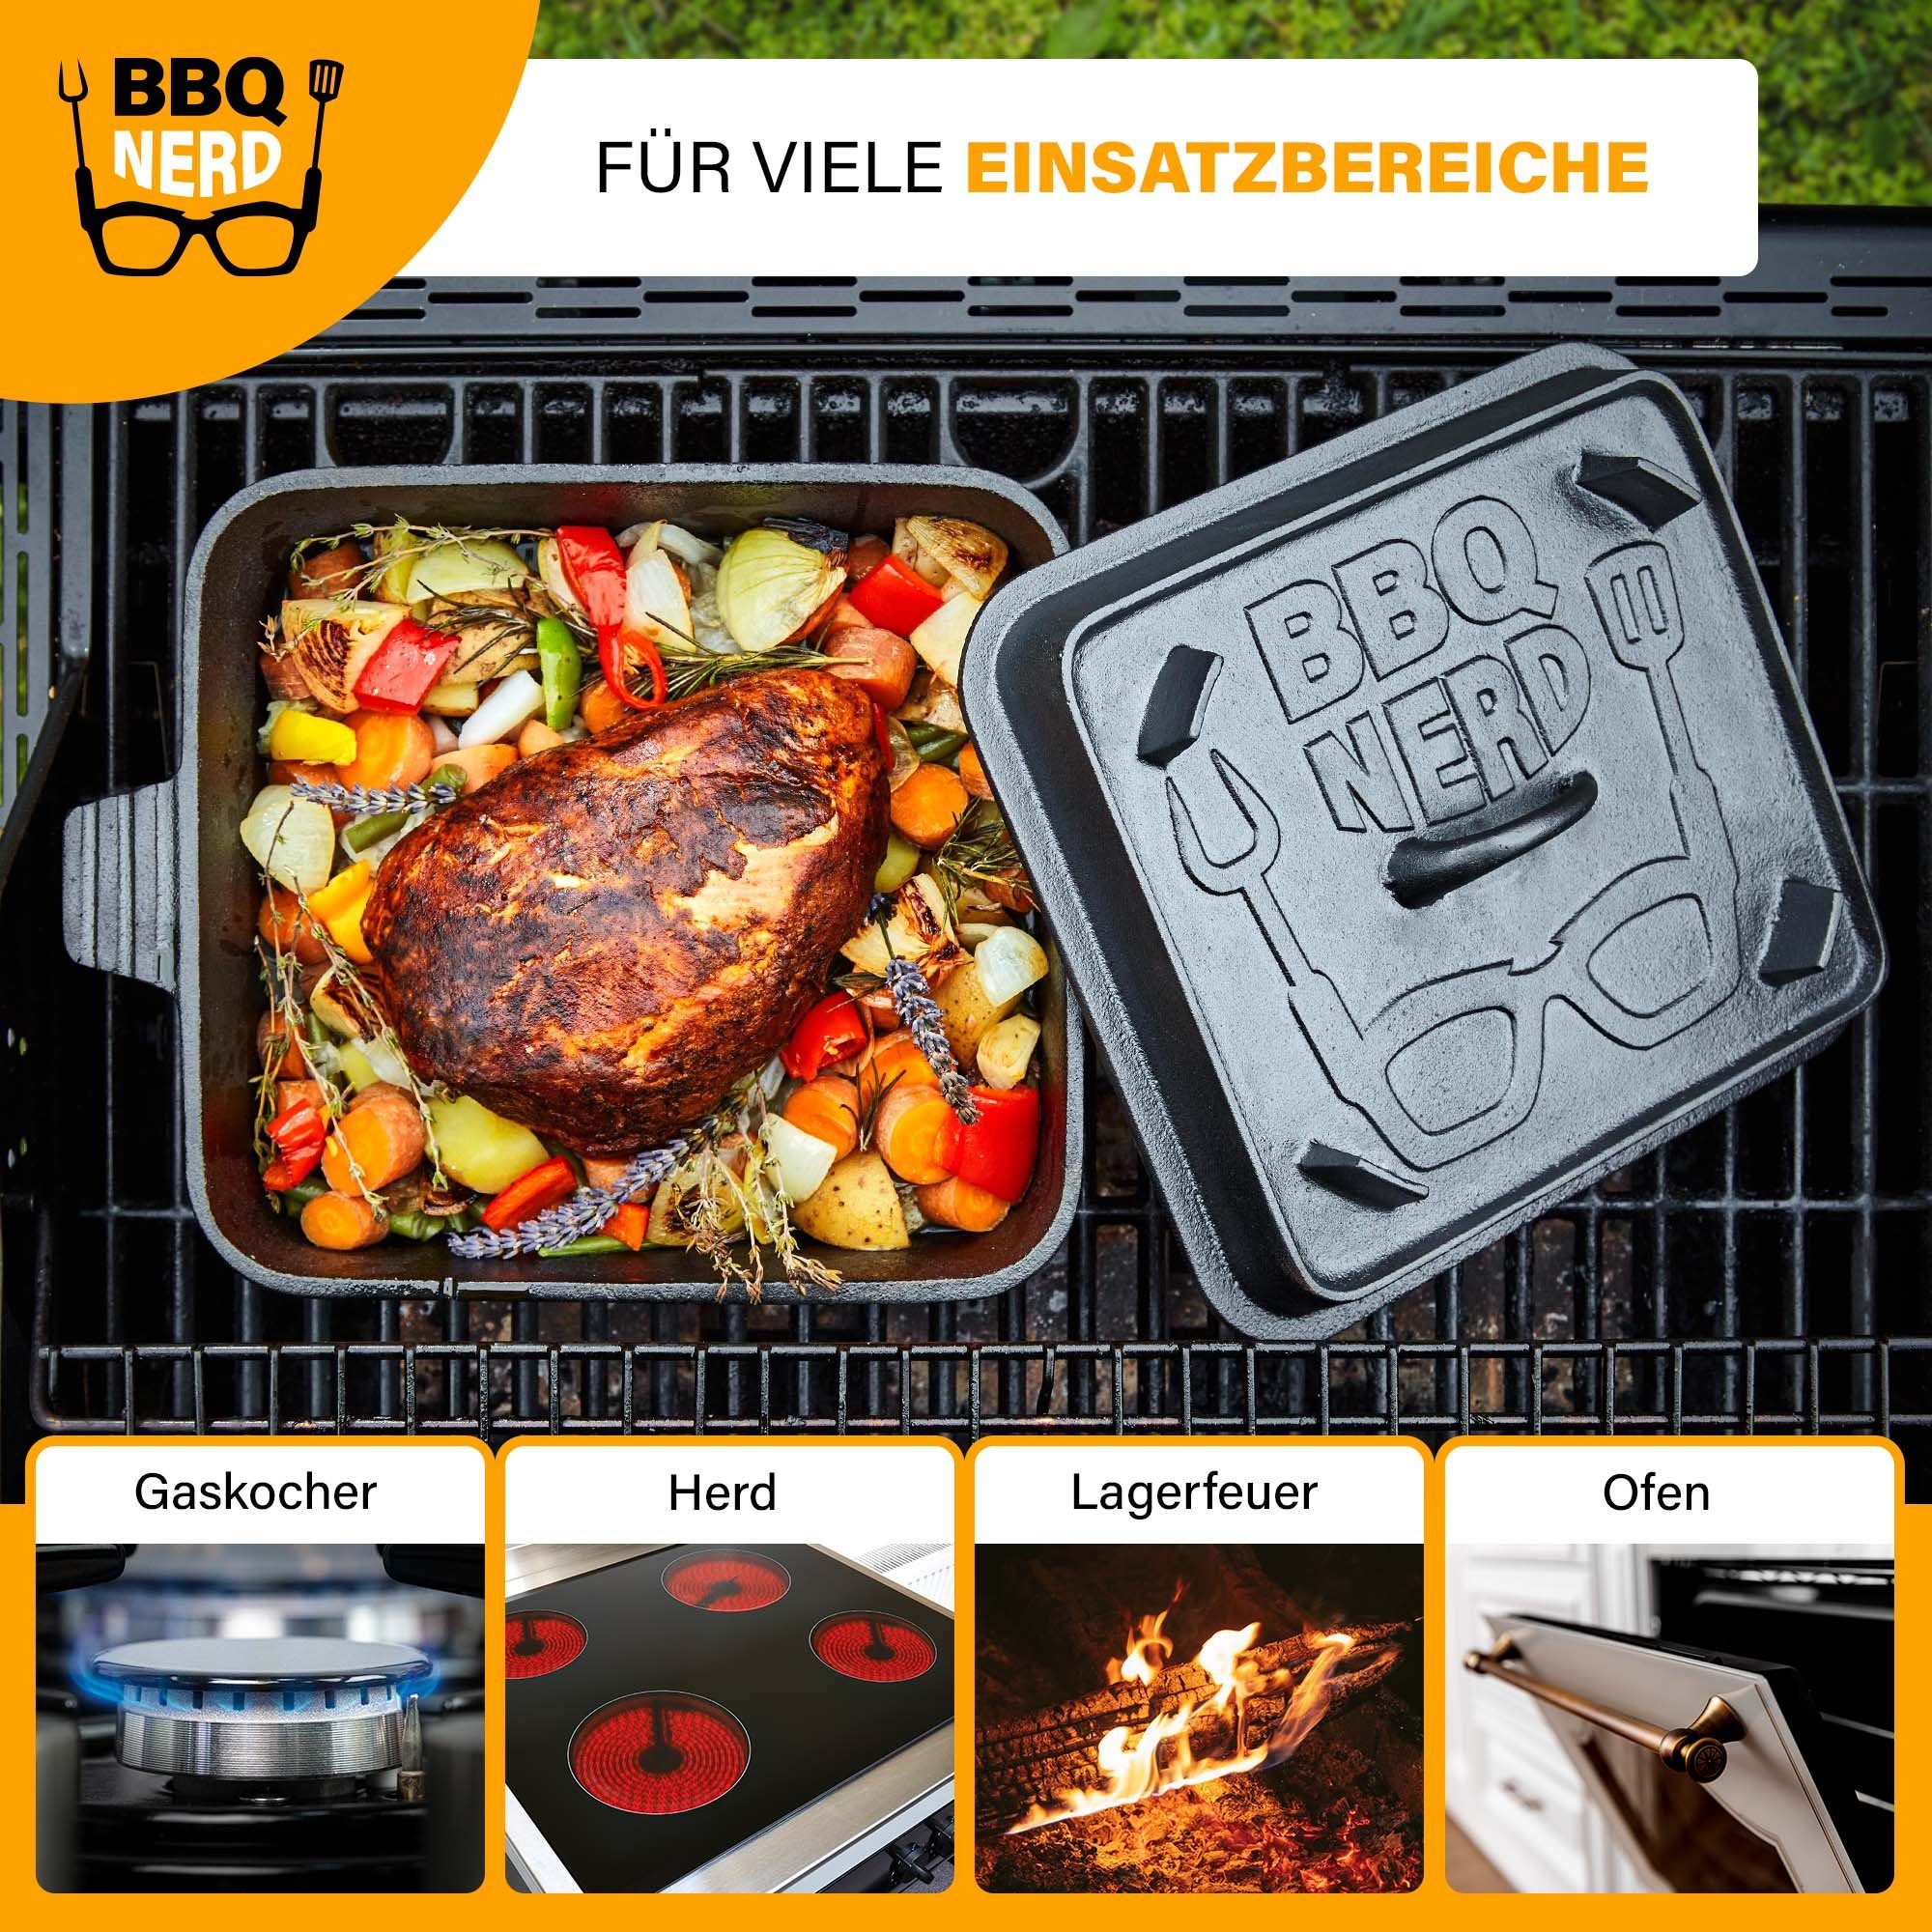  Brotbackform Deckel , Dutch Oven BBQ - Kastenform Brottopf Nerd Brotbackform, mit